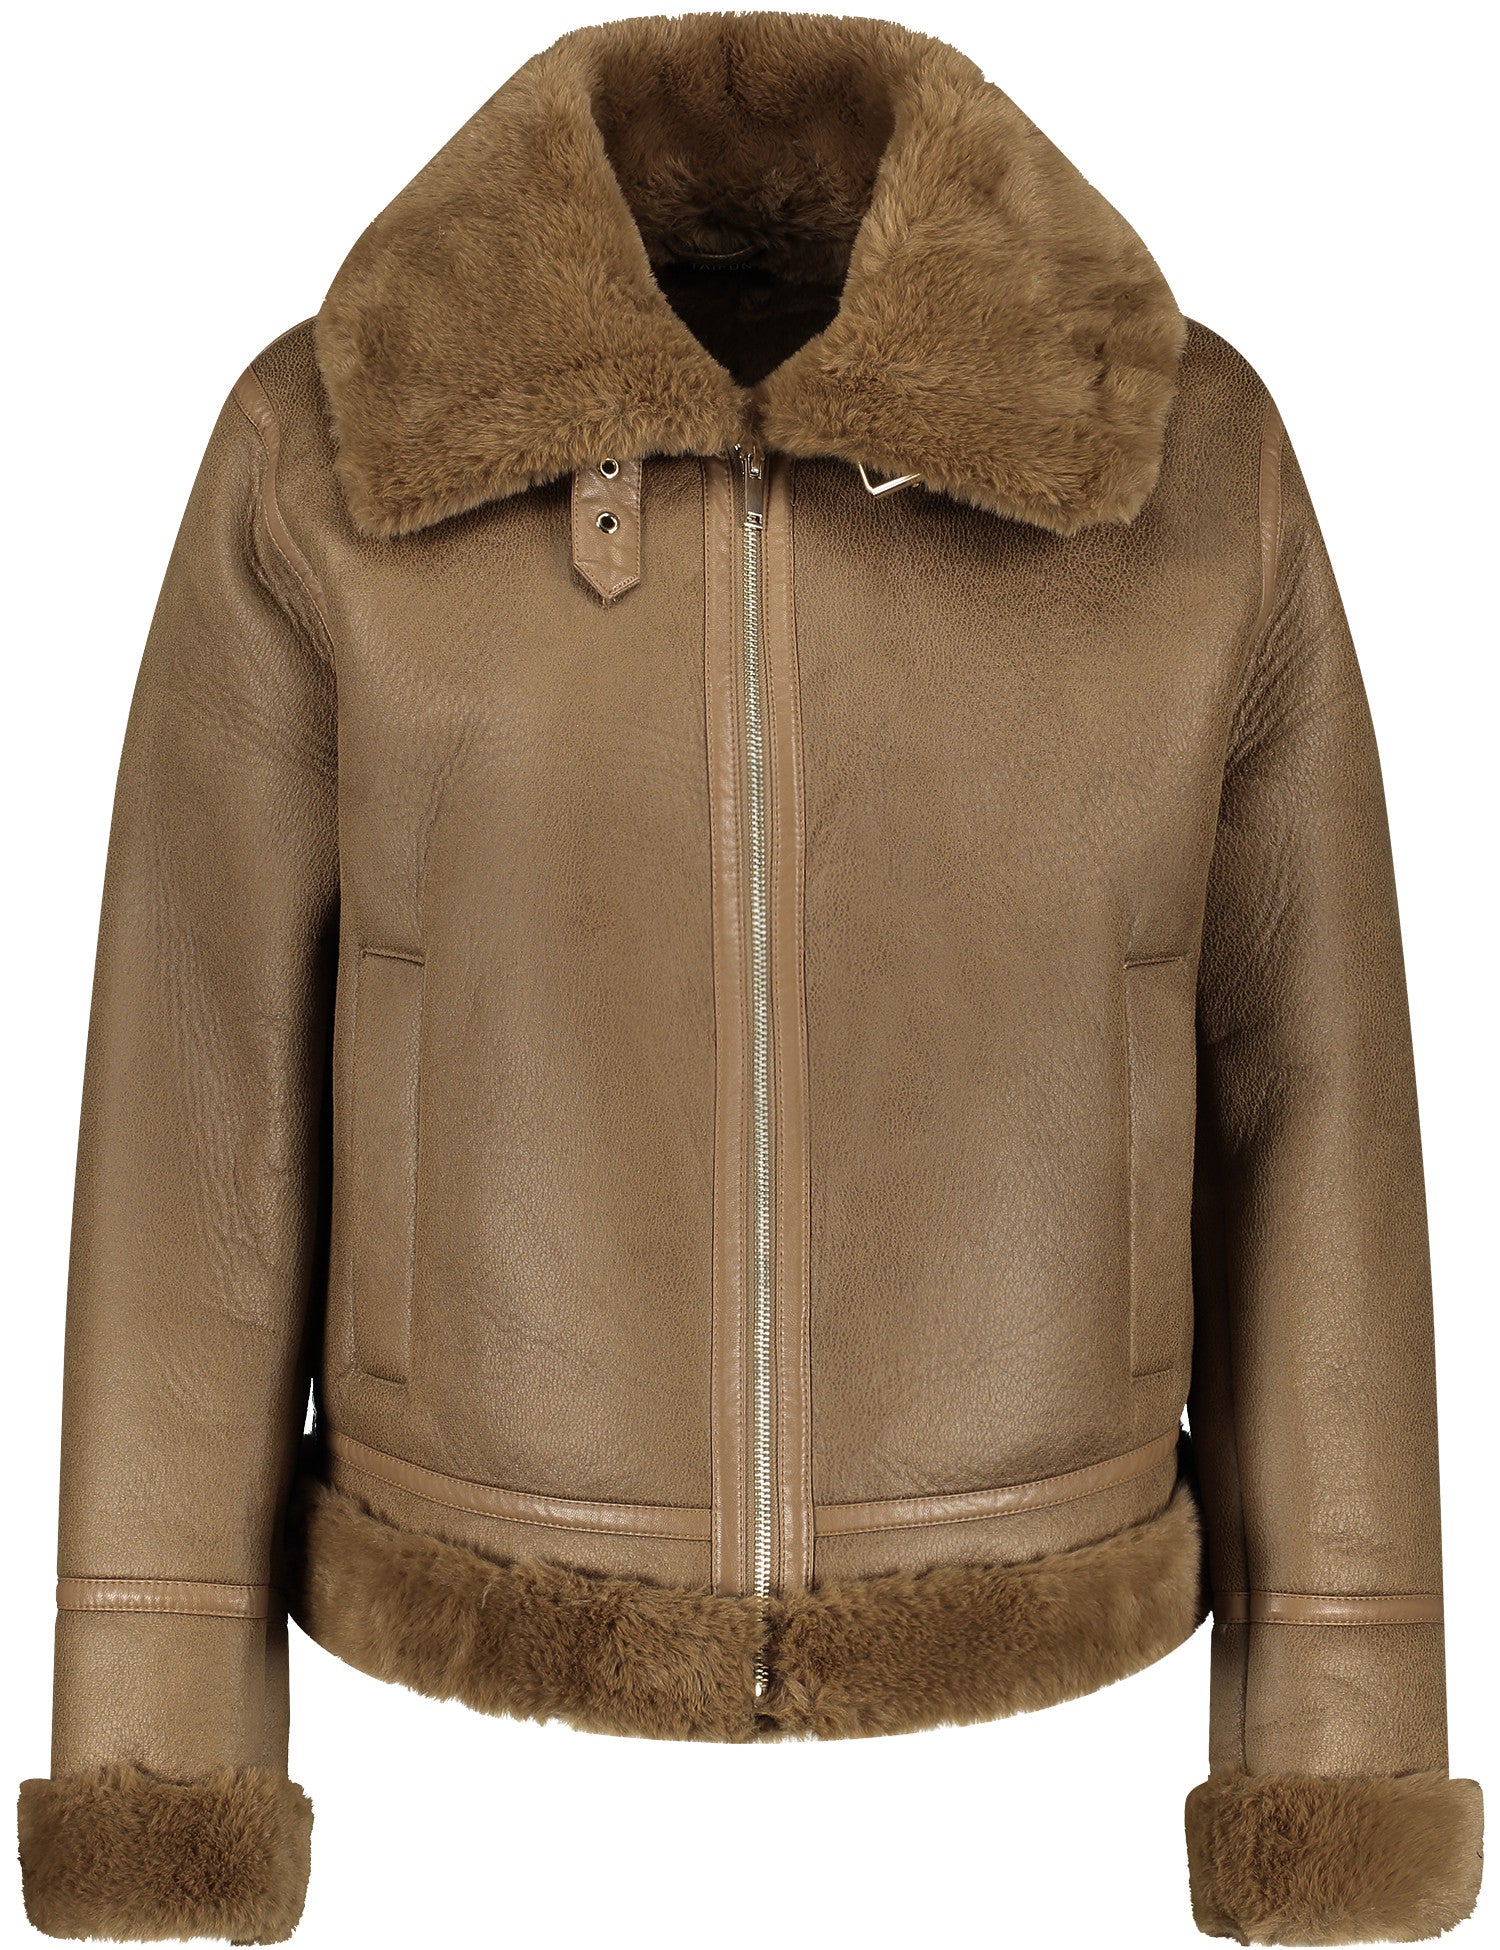 Faux Leather/Fur Jacket